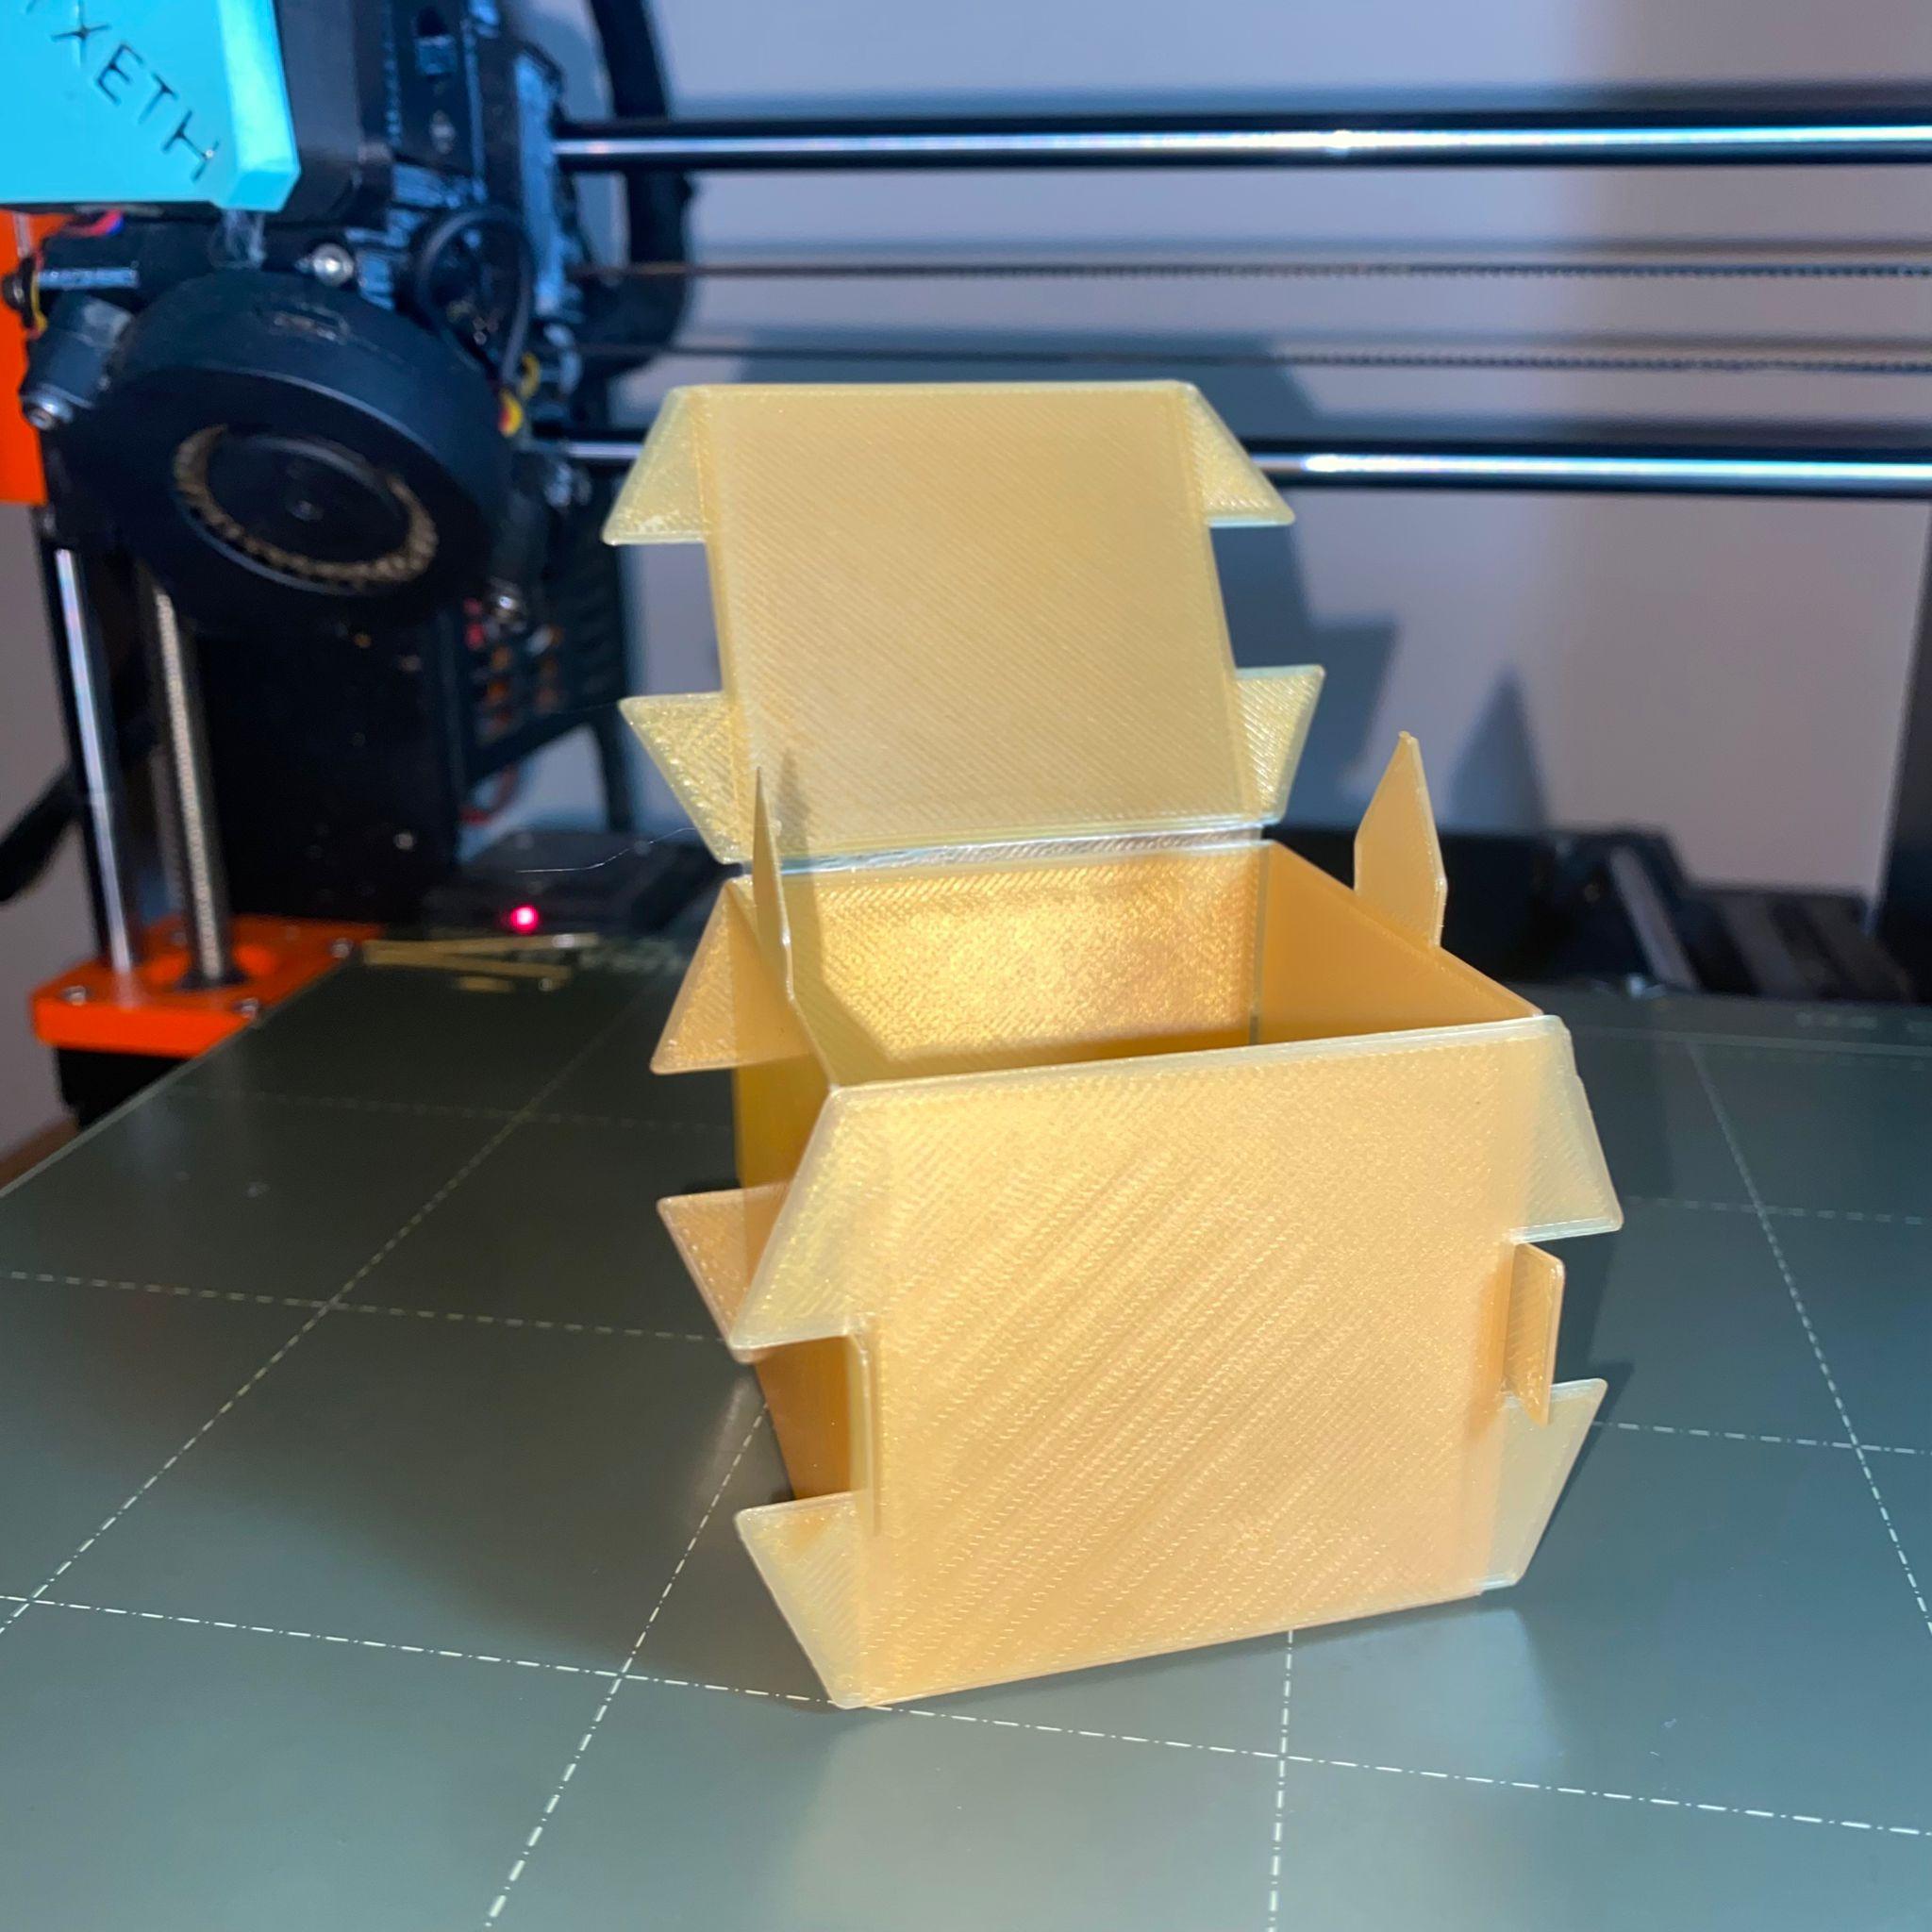 Foldable Cube Box 3d model